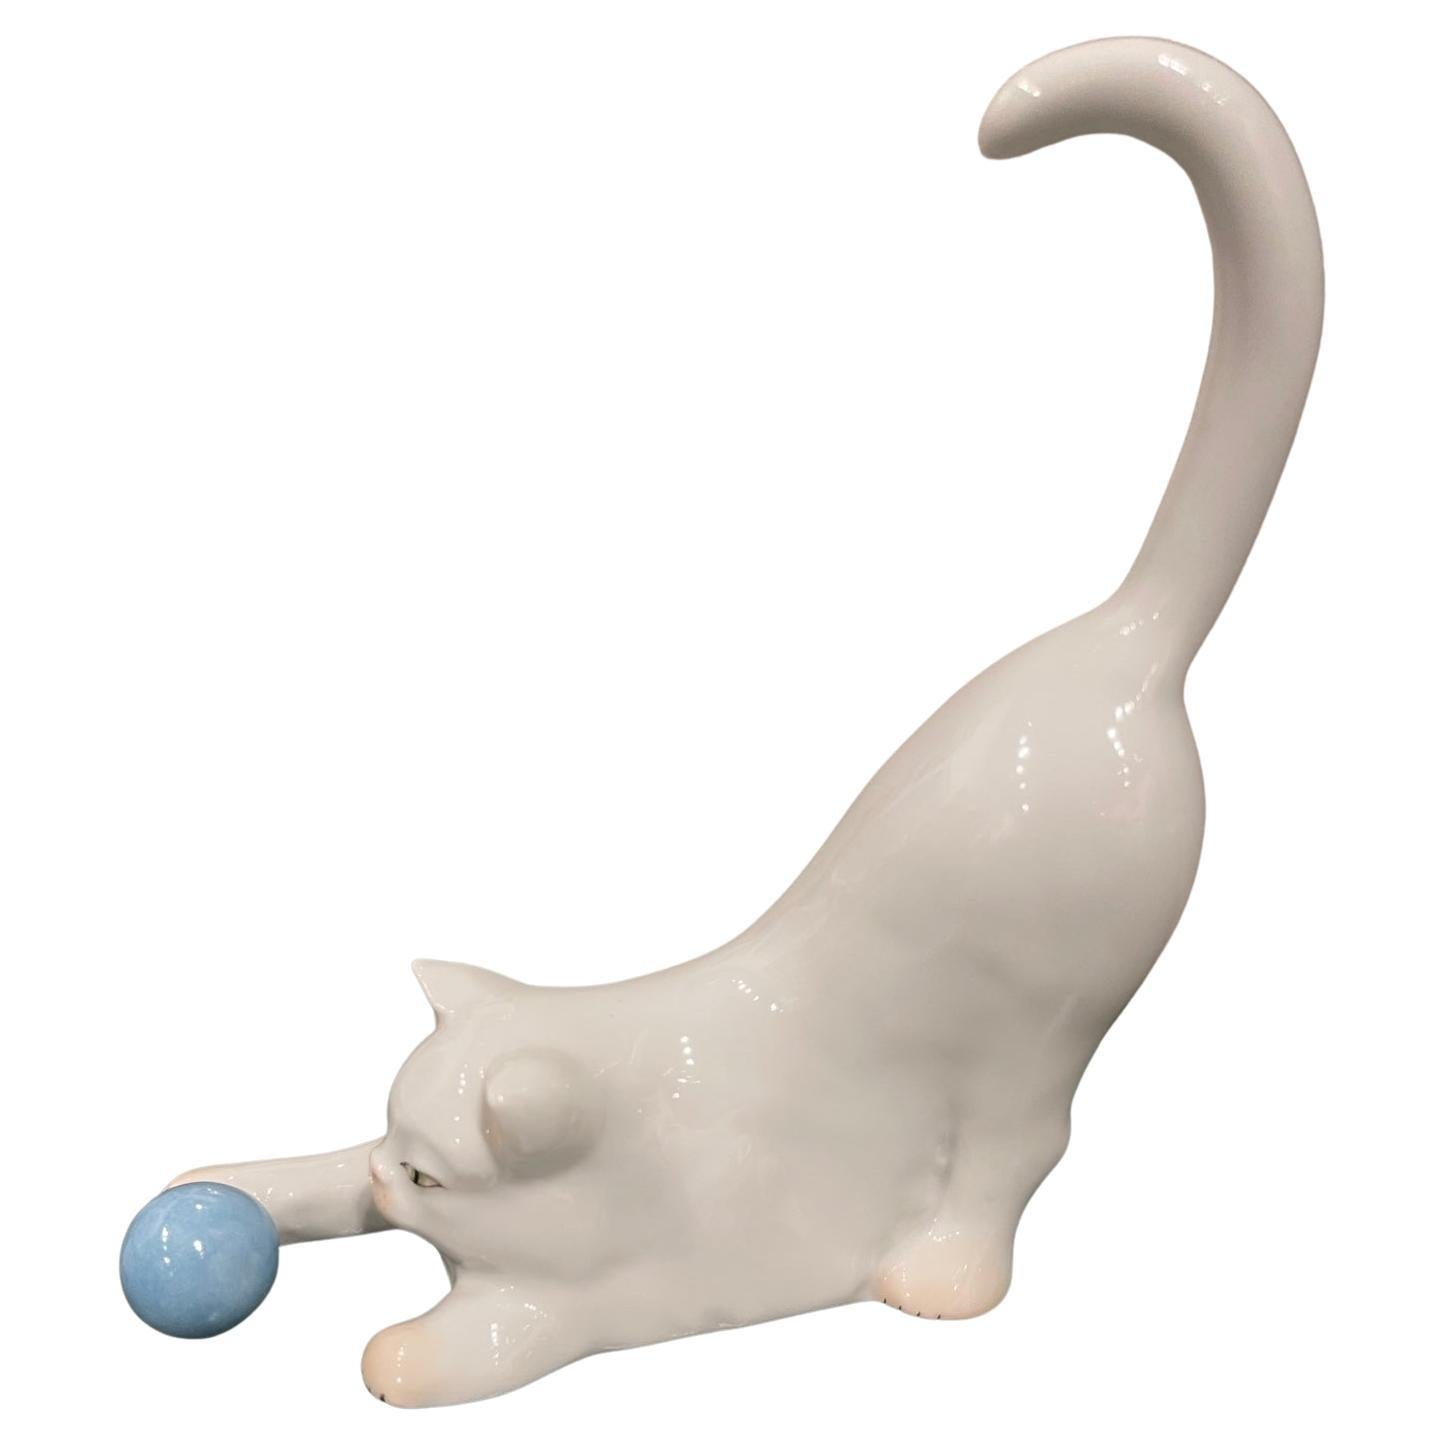 Figure Herend d'un chat blanc jouant avec un Ball and Ball bleu, 20e siècle